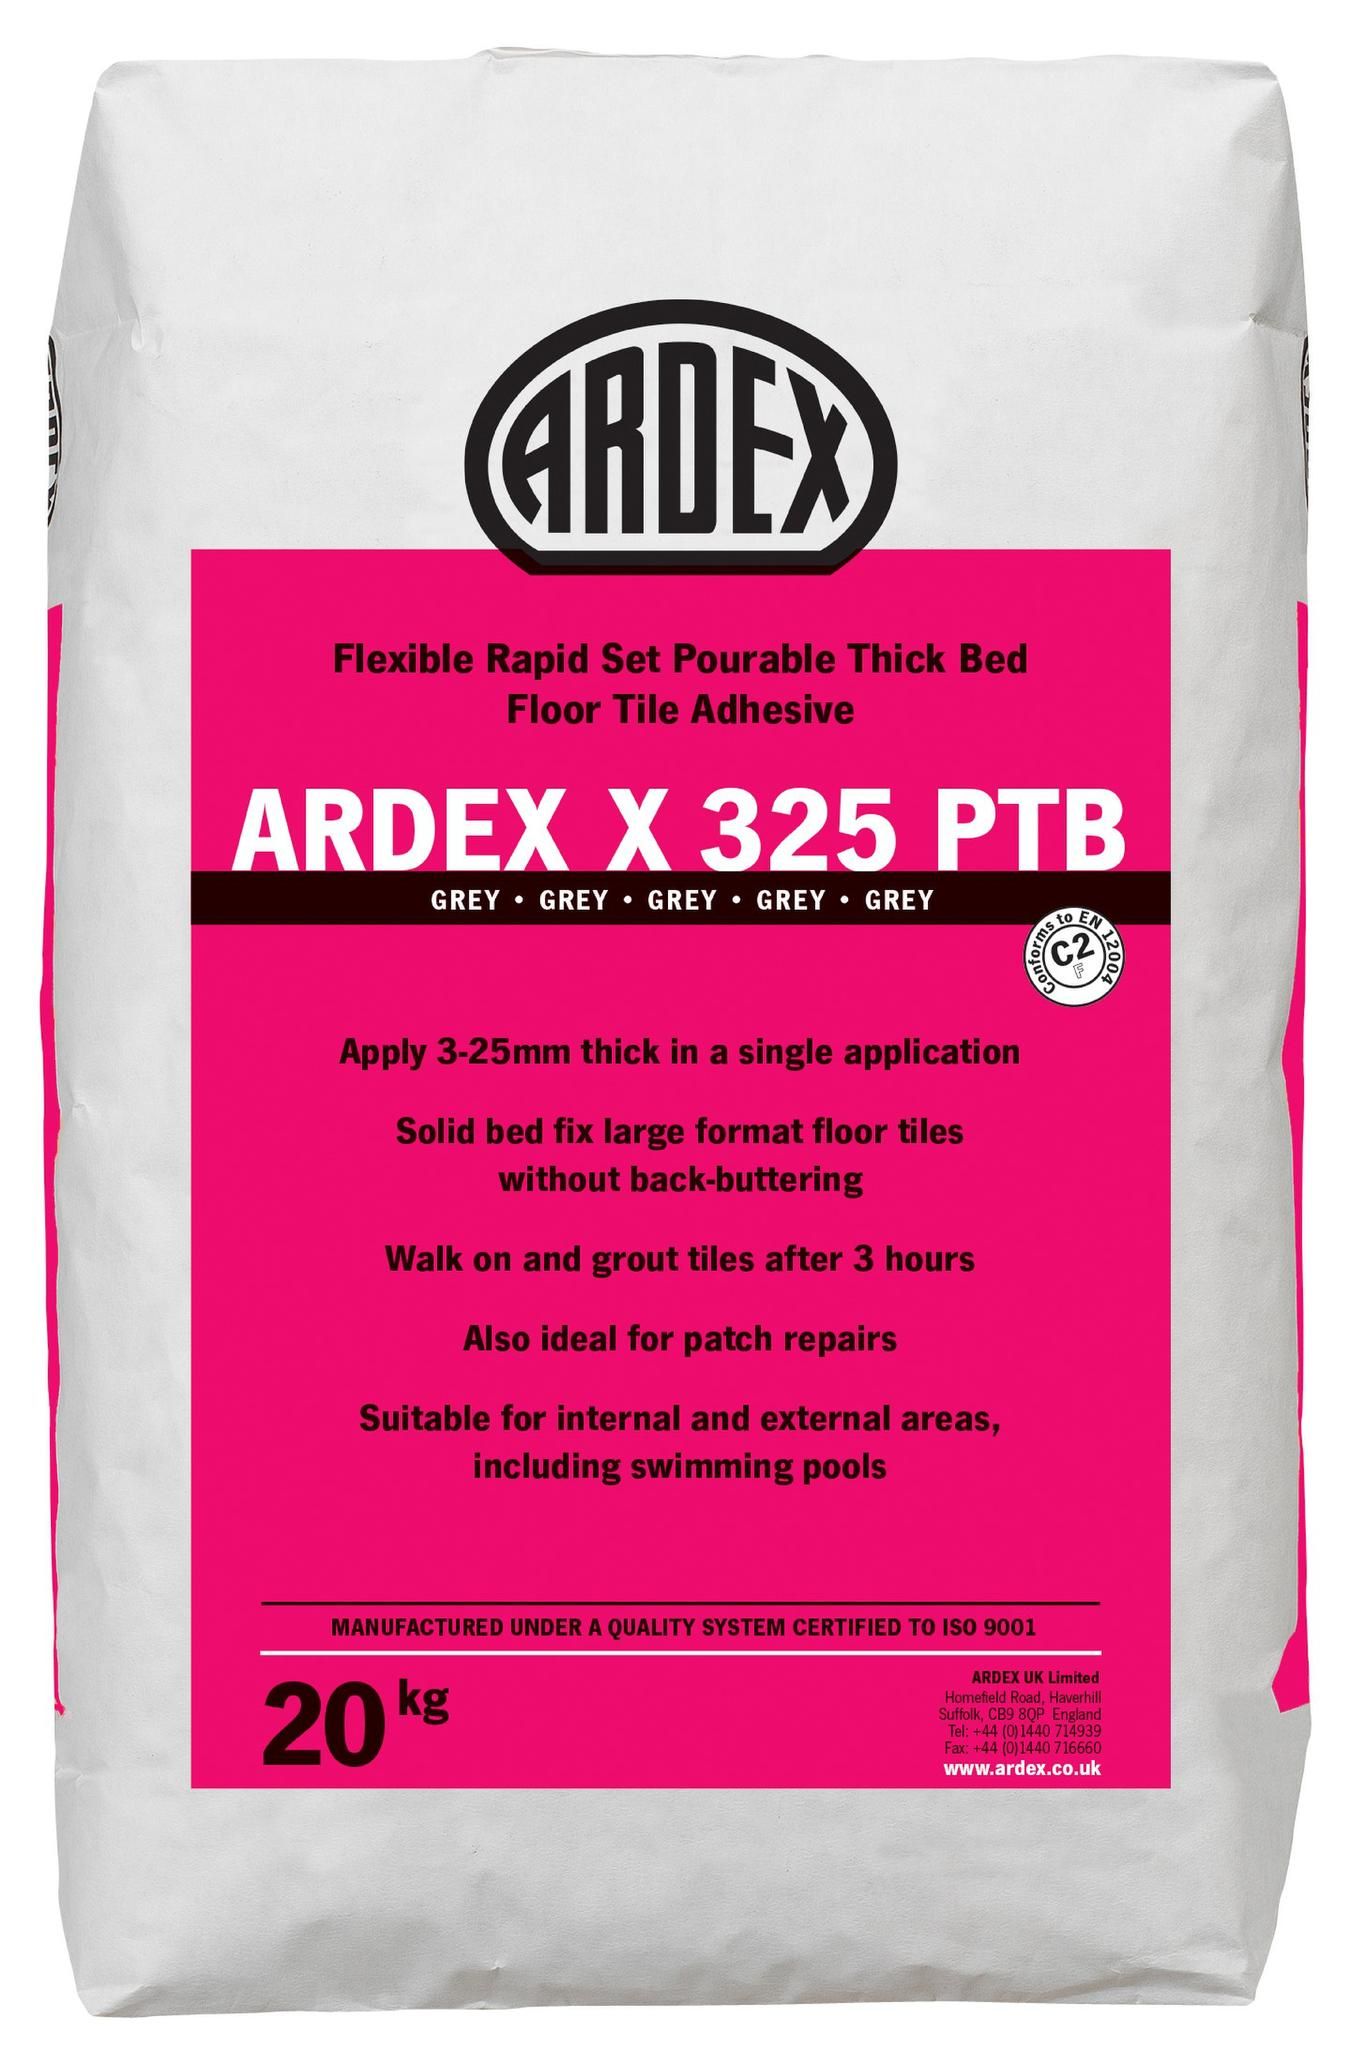 ARDEX X 325 PTB Flexible Rapid Set Pourable Thick Bed Floor Tile Adhesive